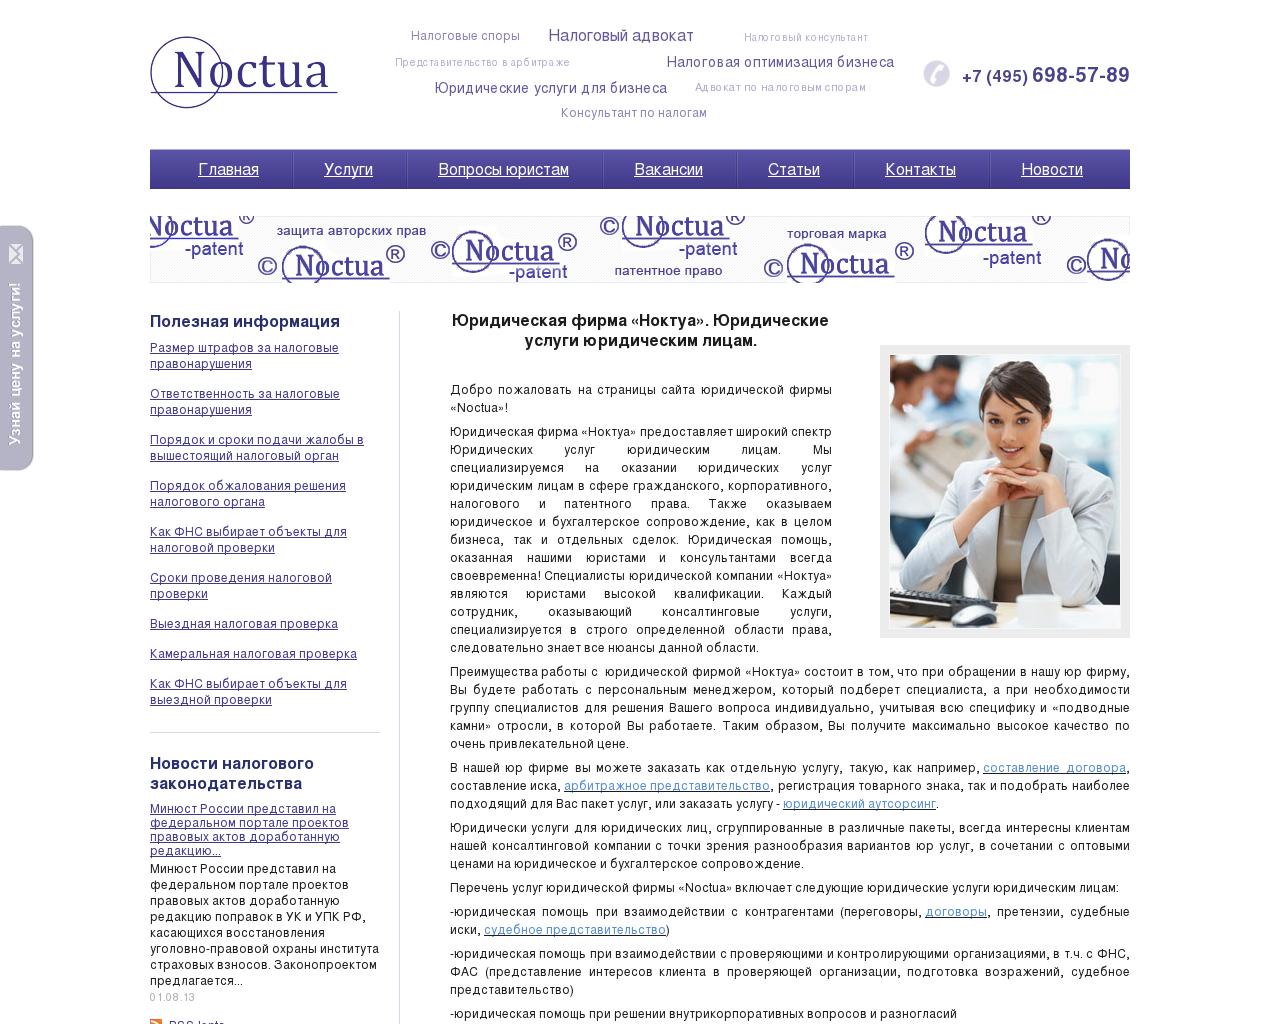 Изображение сайта noctua-patent.ru в разрешении 1280x1024